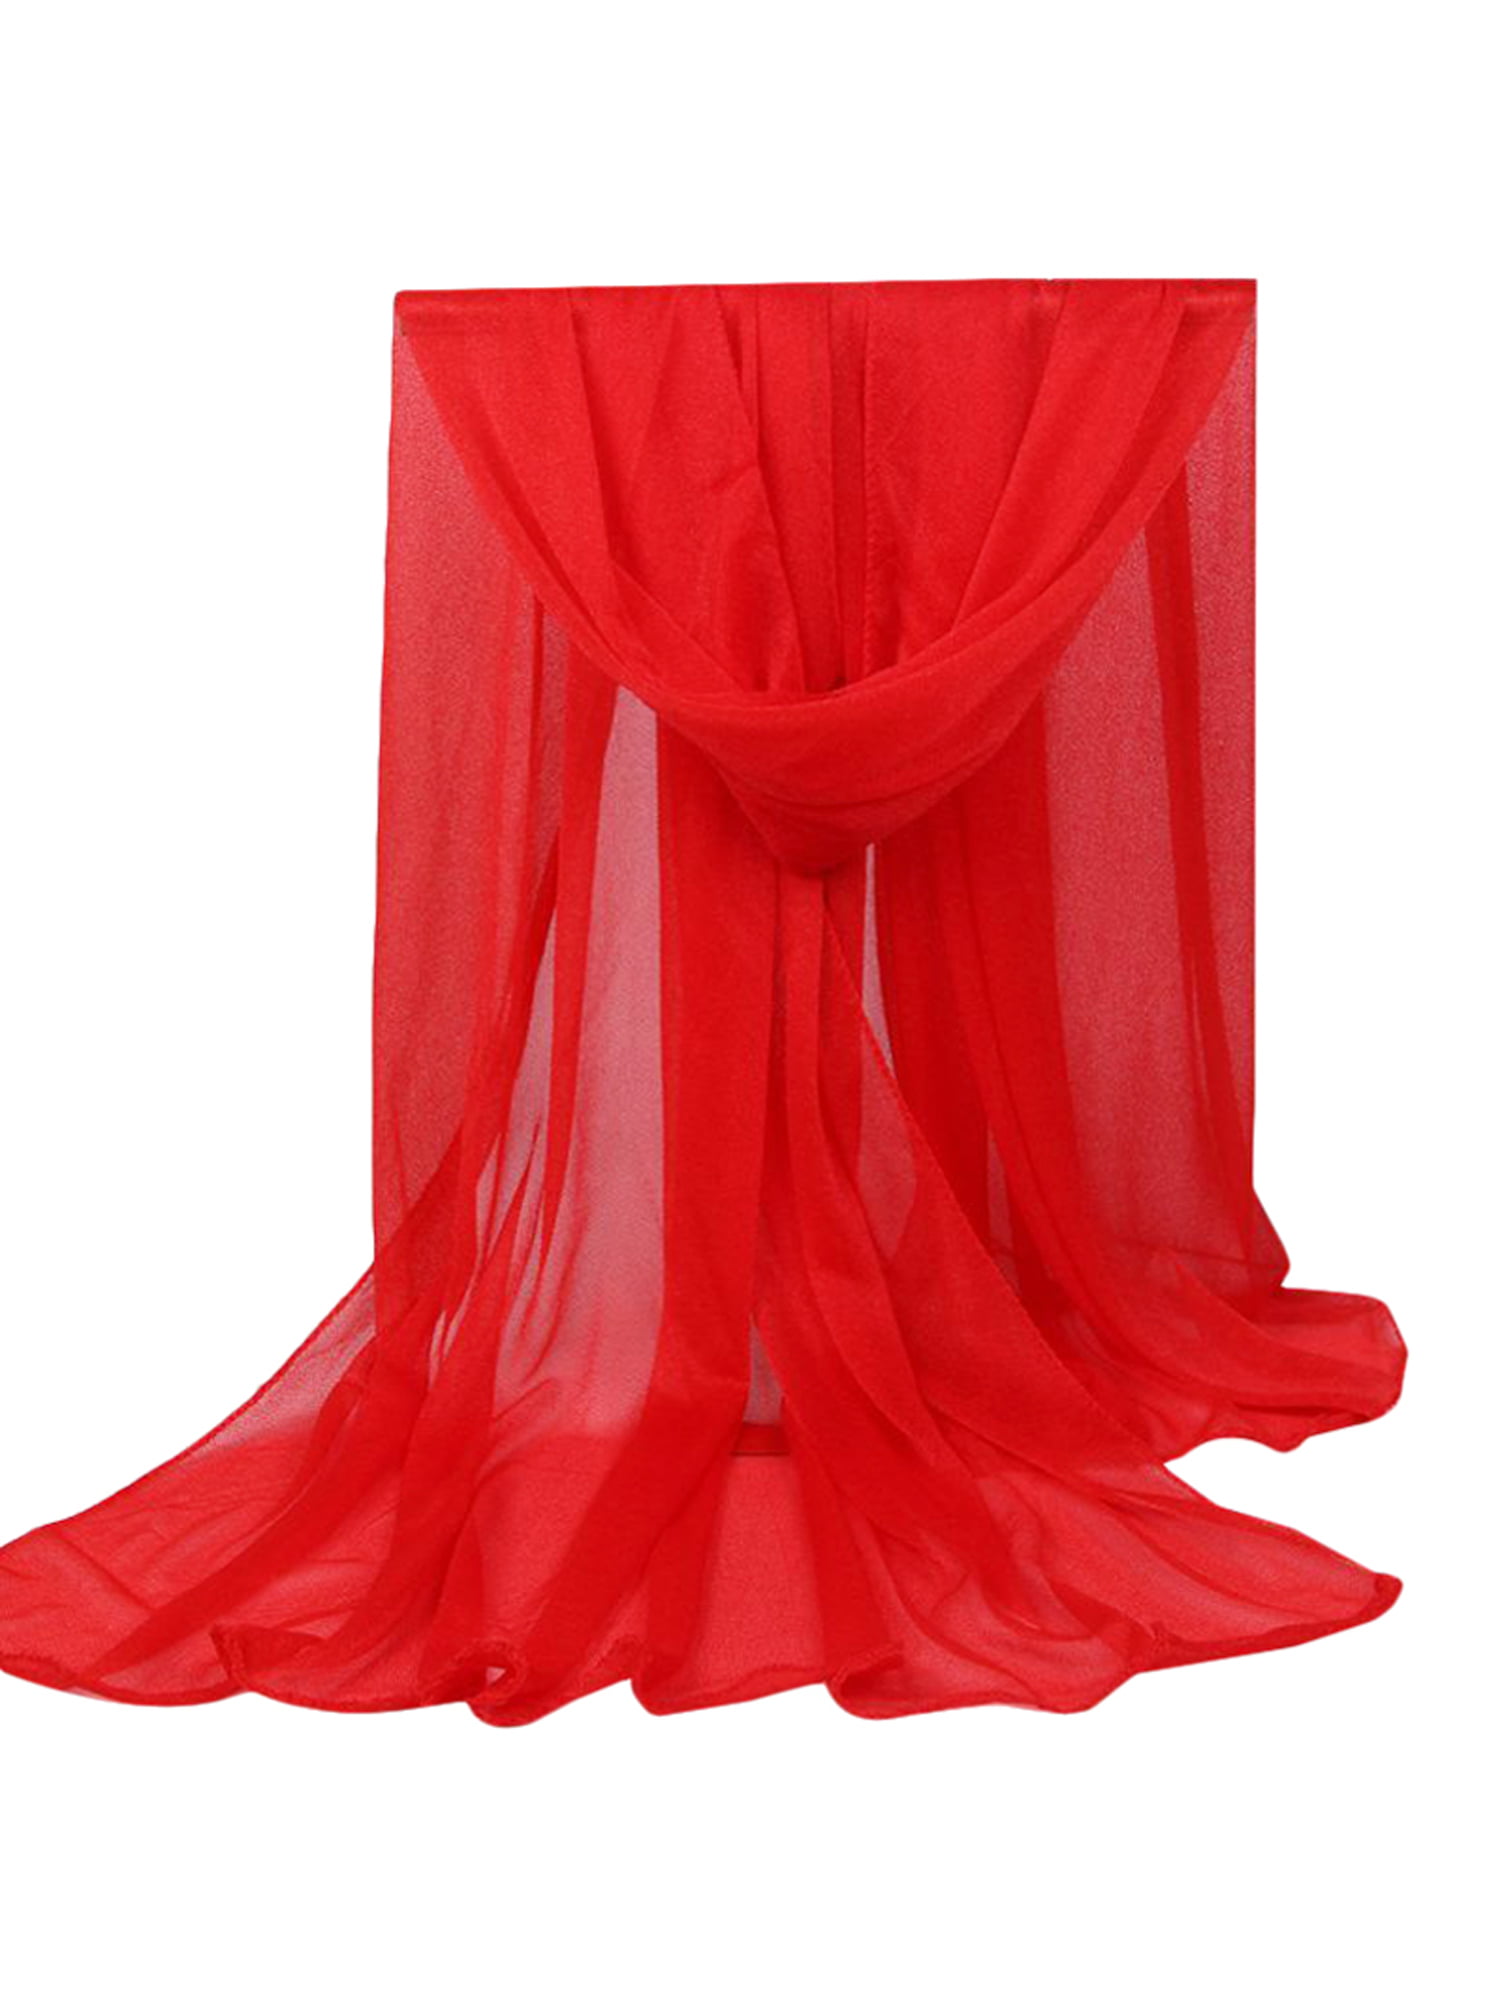 Dark Red Sheer Chiffon Square Neck Scarf 27x27 Neckerchief 1950s Retro Classic Headscarf Gift for Women Girls Ladies Favor 